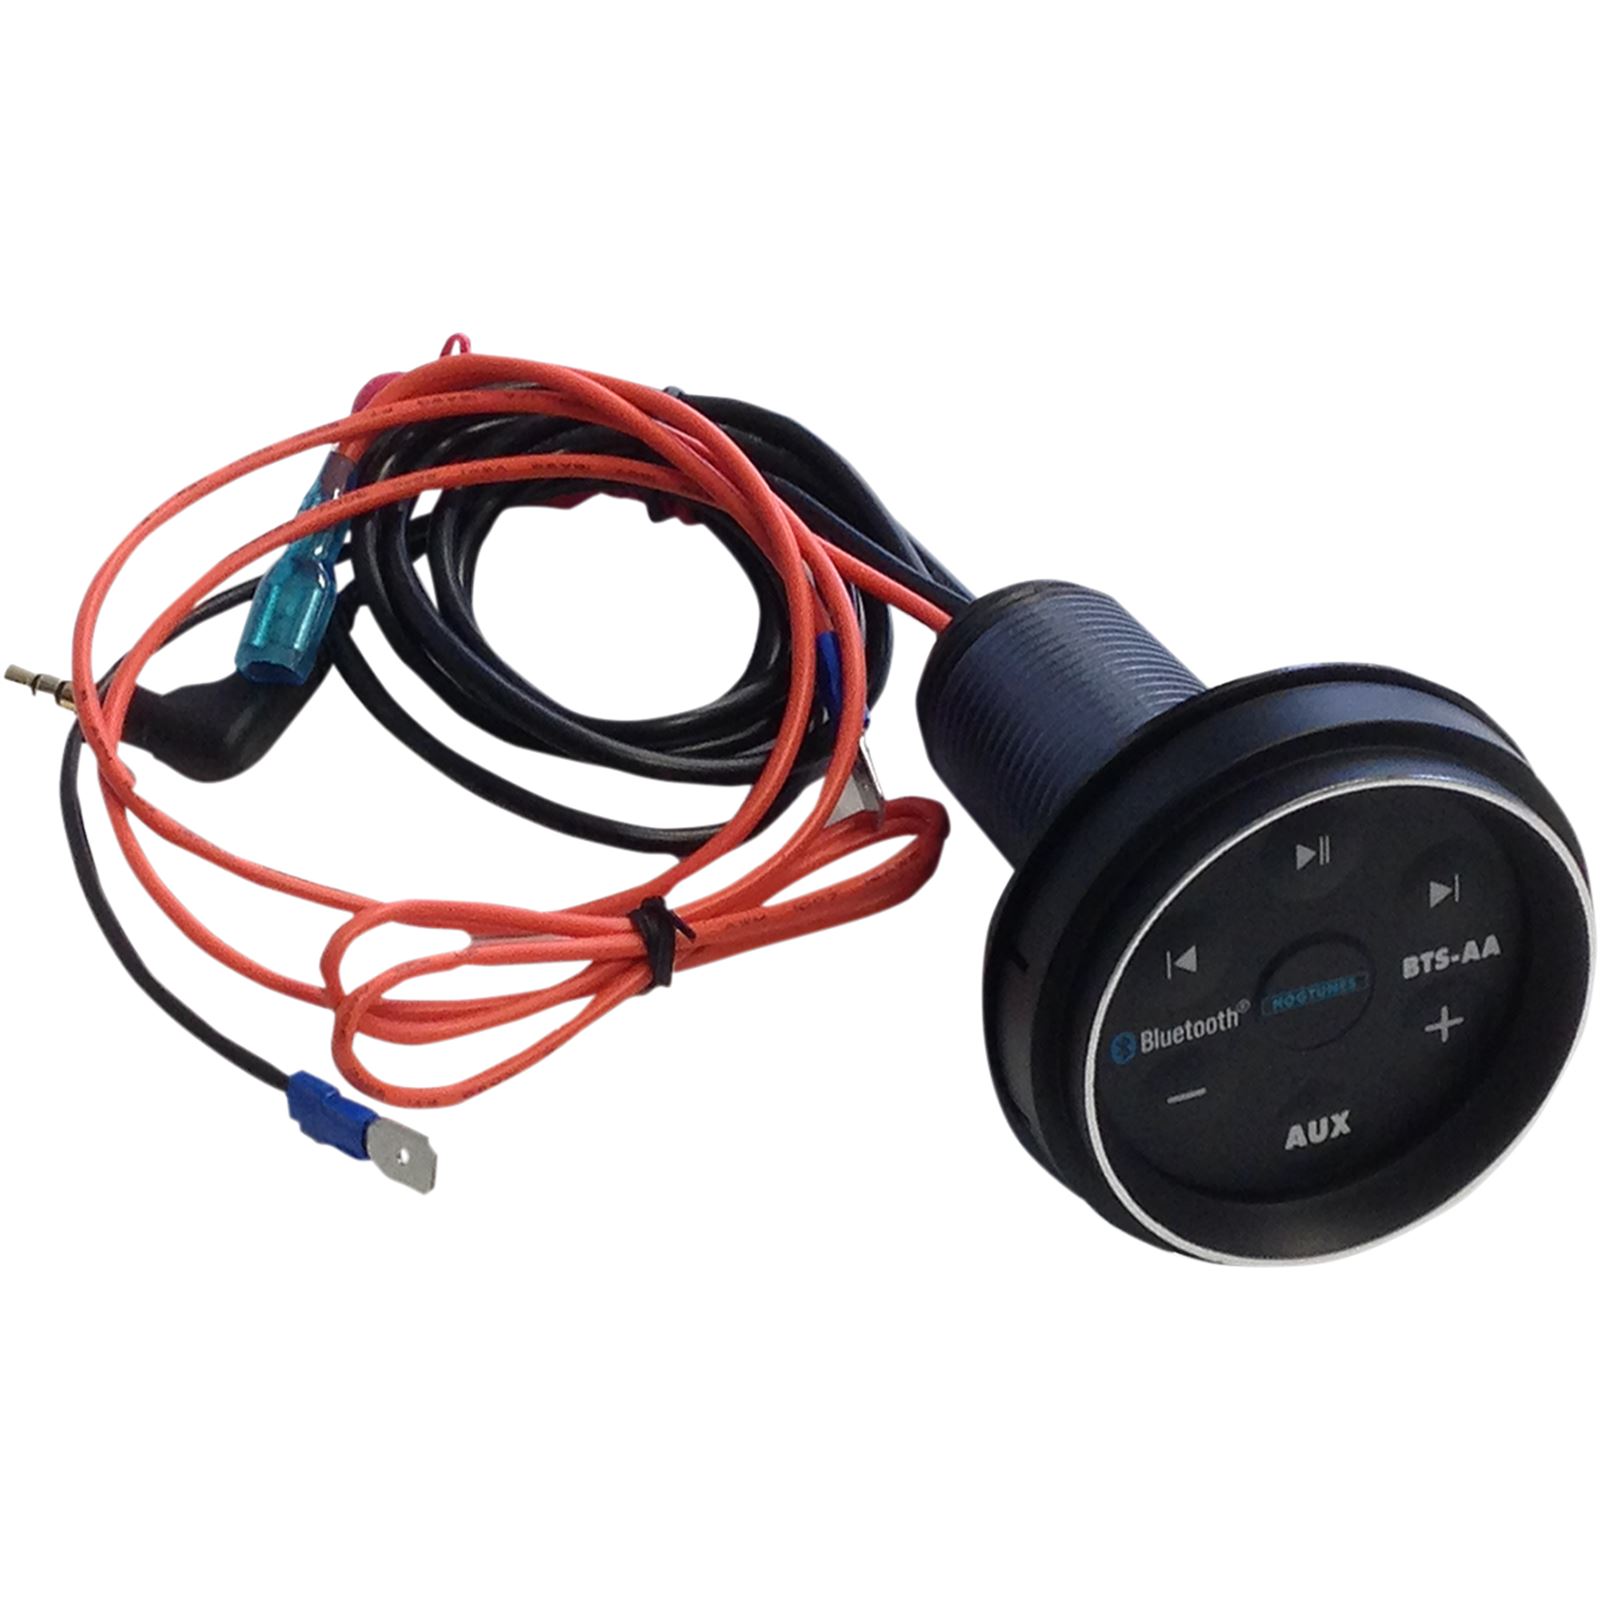 Hogtunes Bluetooth Music Receiver/Controller - Harley Davidson